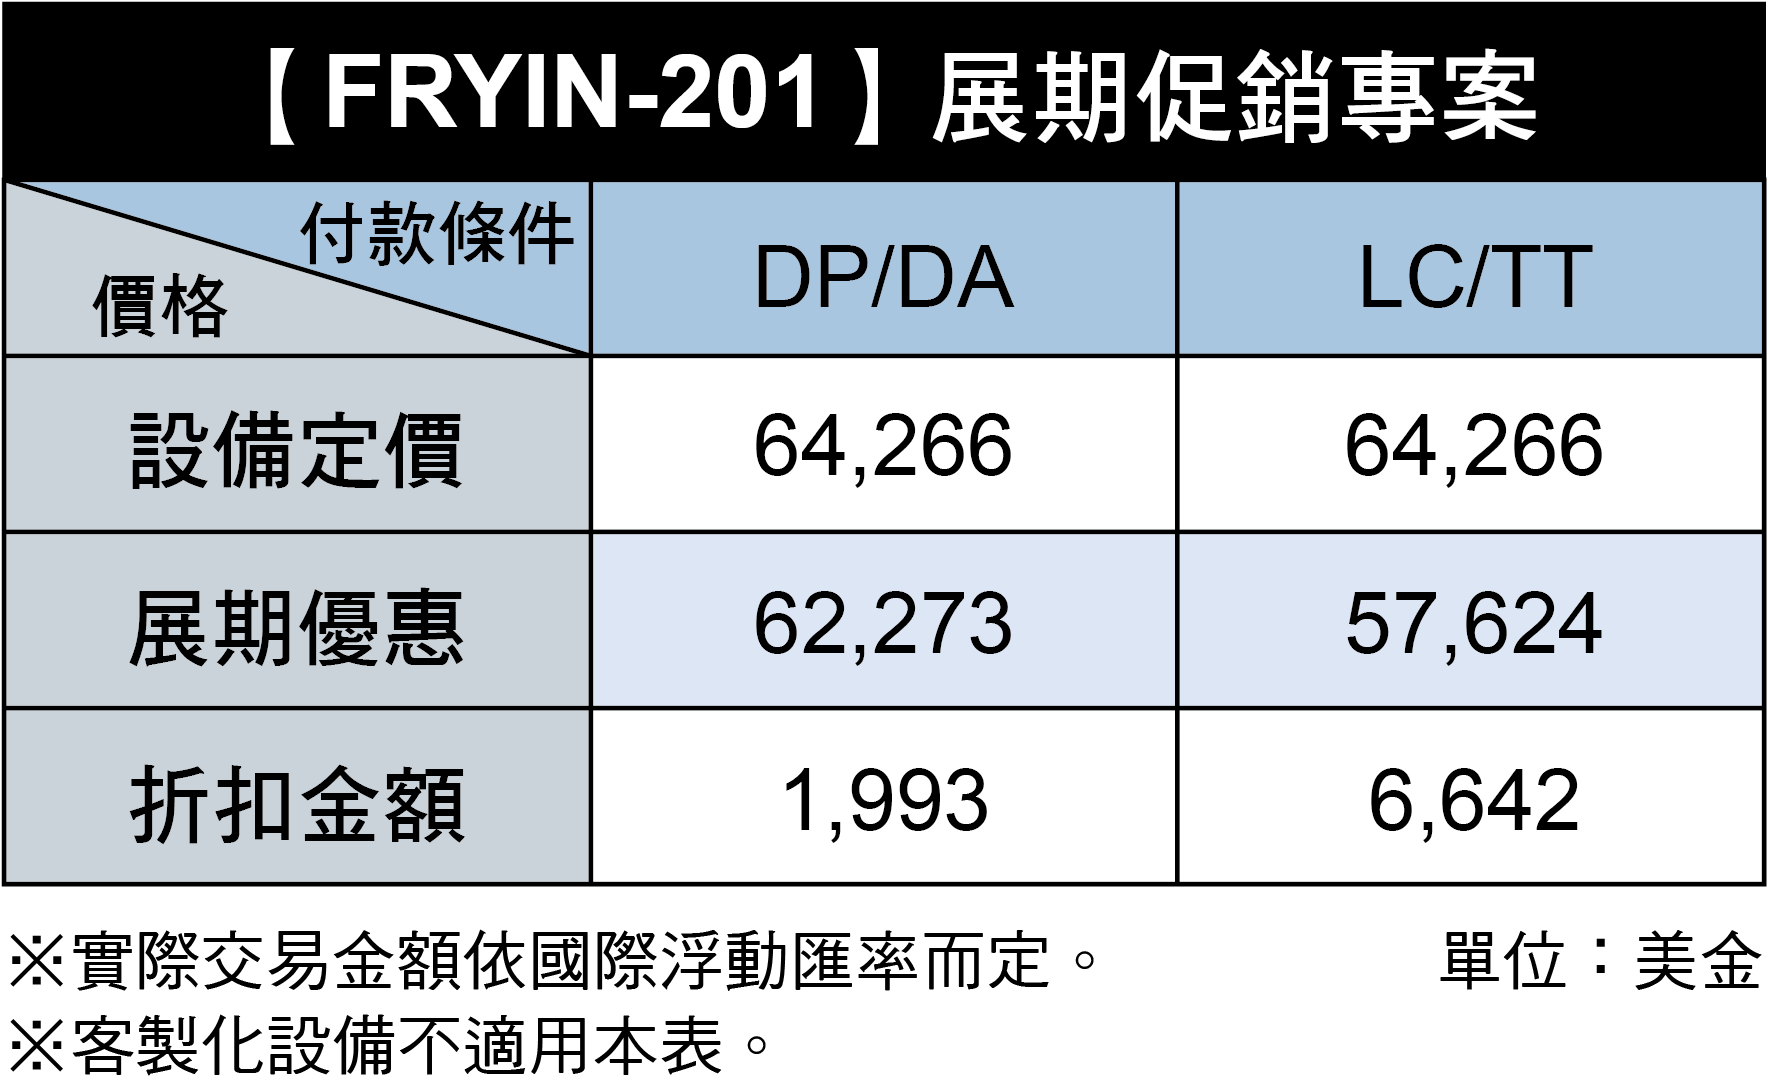 FRYIN-201フライヤー特別割引